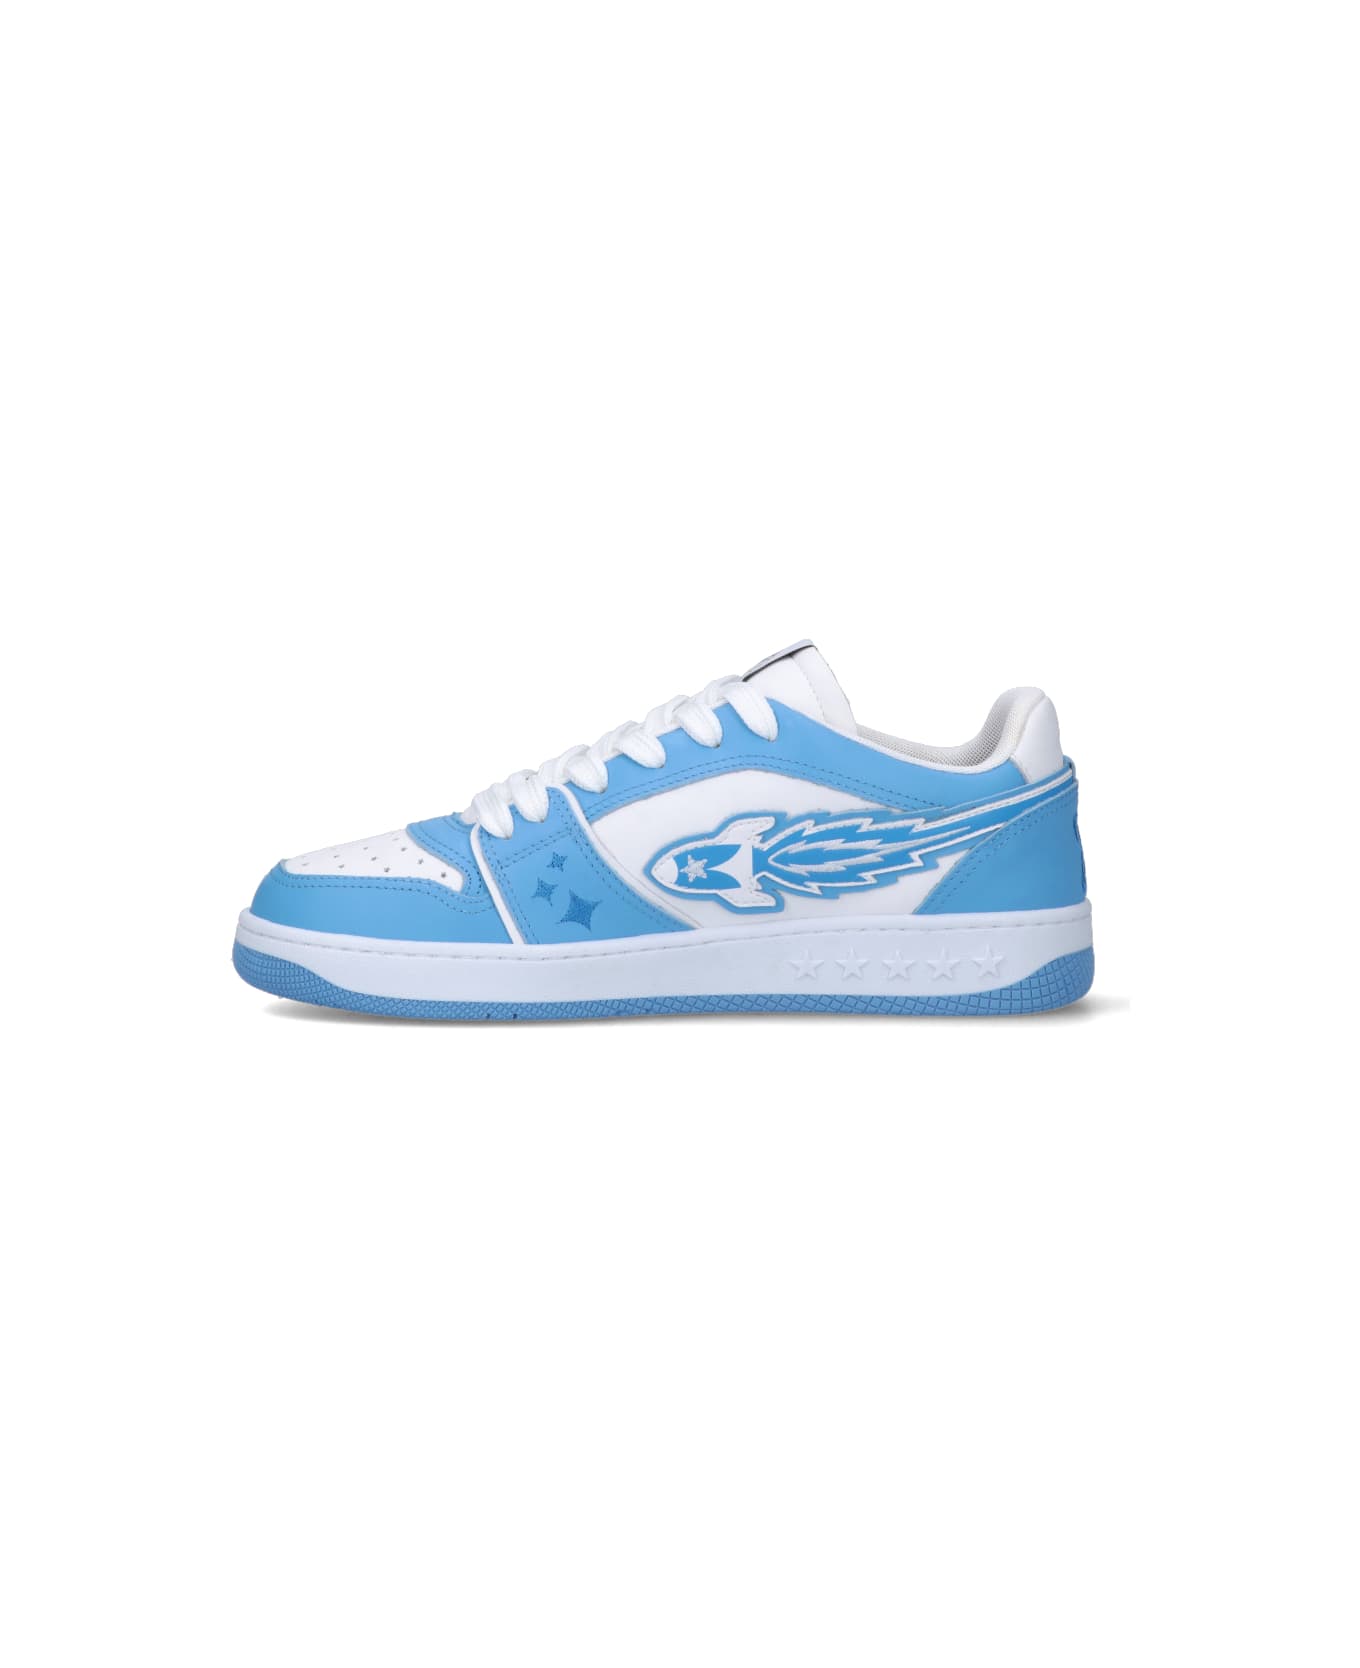 Enterprise Japan Sneakers - Light blue